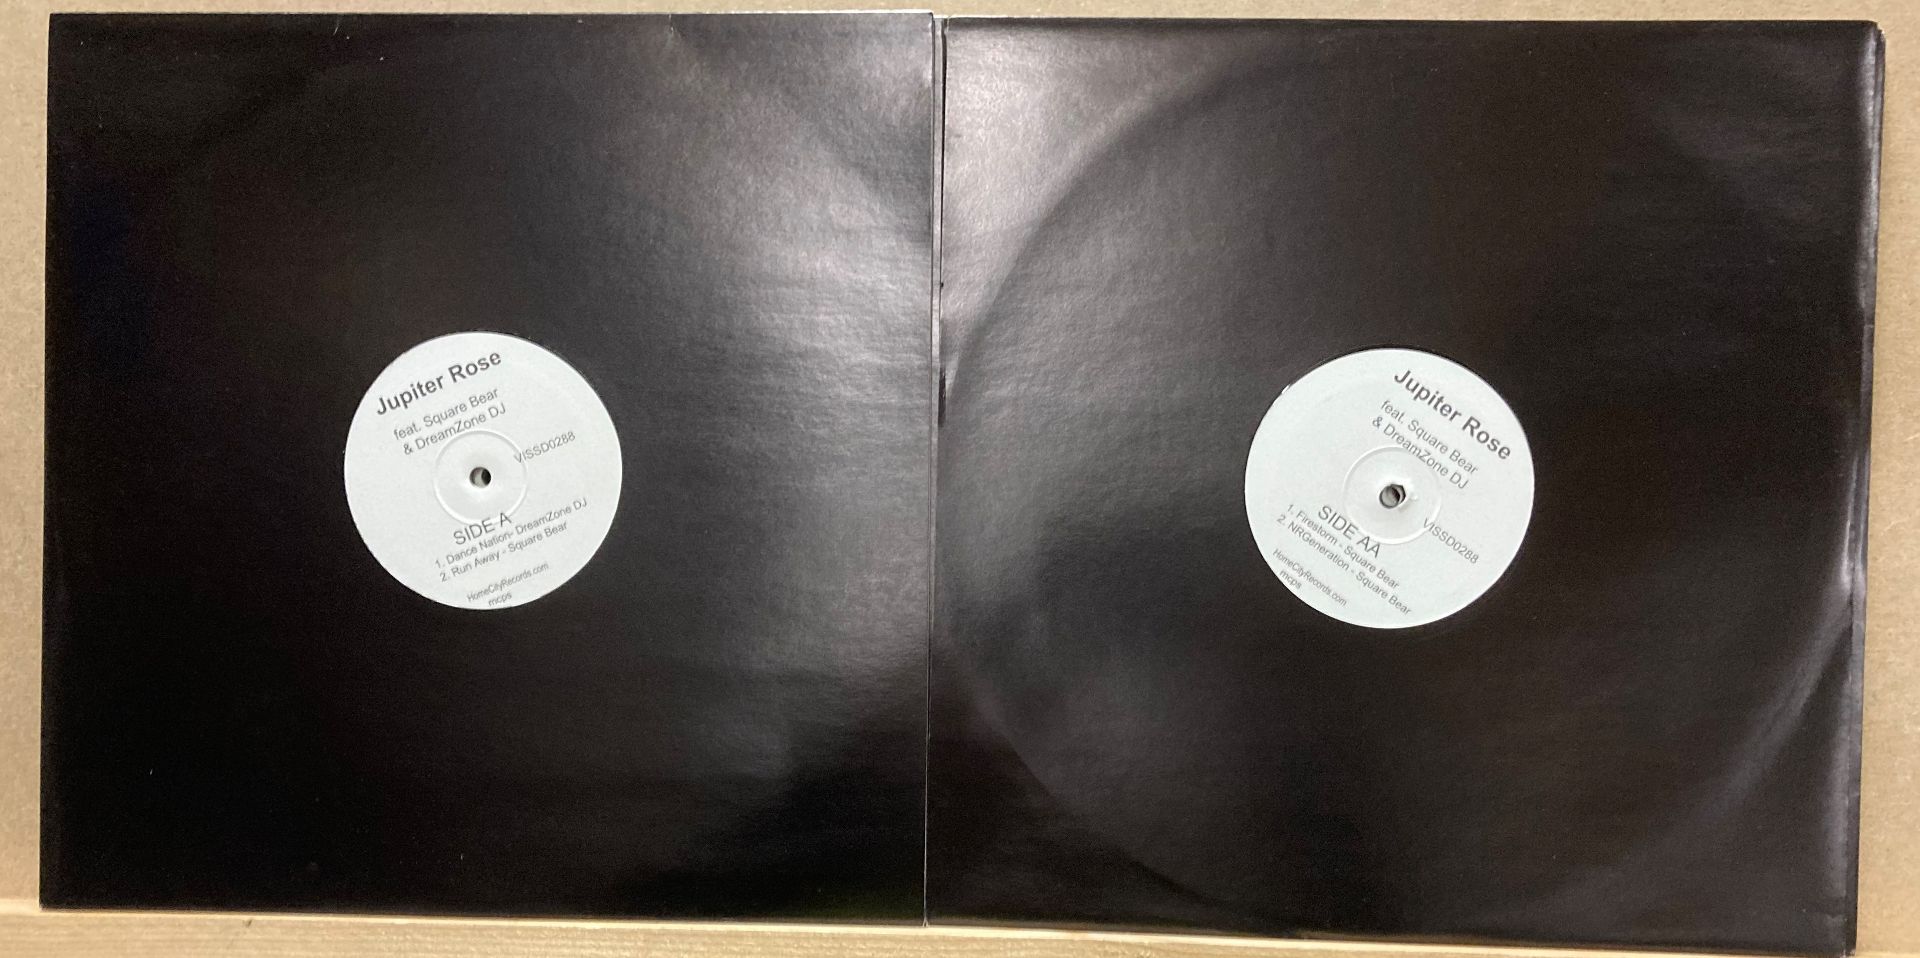 26 X Jupiter Rose Ft Square Bear & DreamZone DJ 12 “ Vinyl